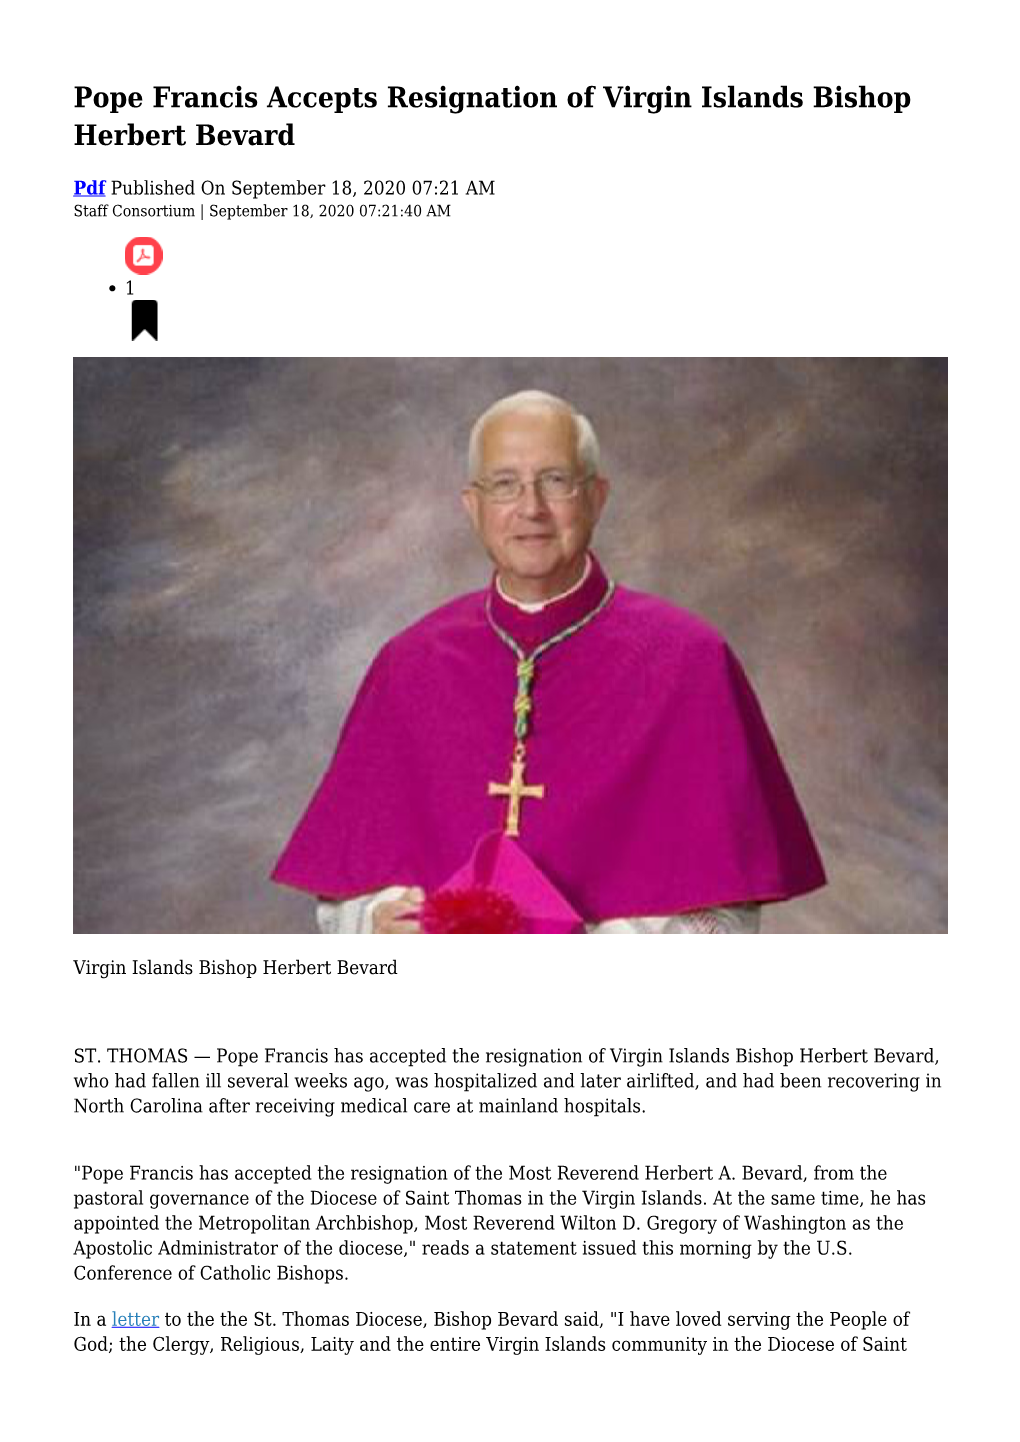 Pope Francis Accepts Resignation of Virgin Islands Bishop Herbert Bevard